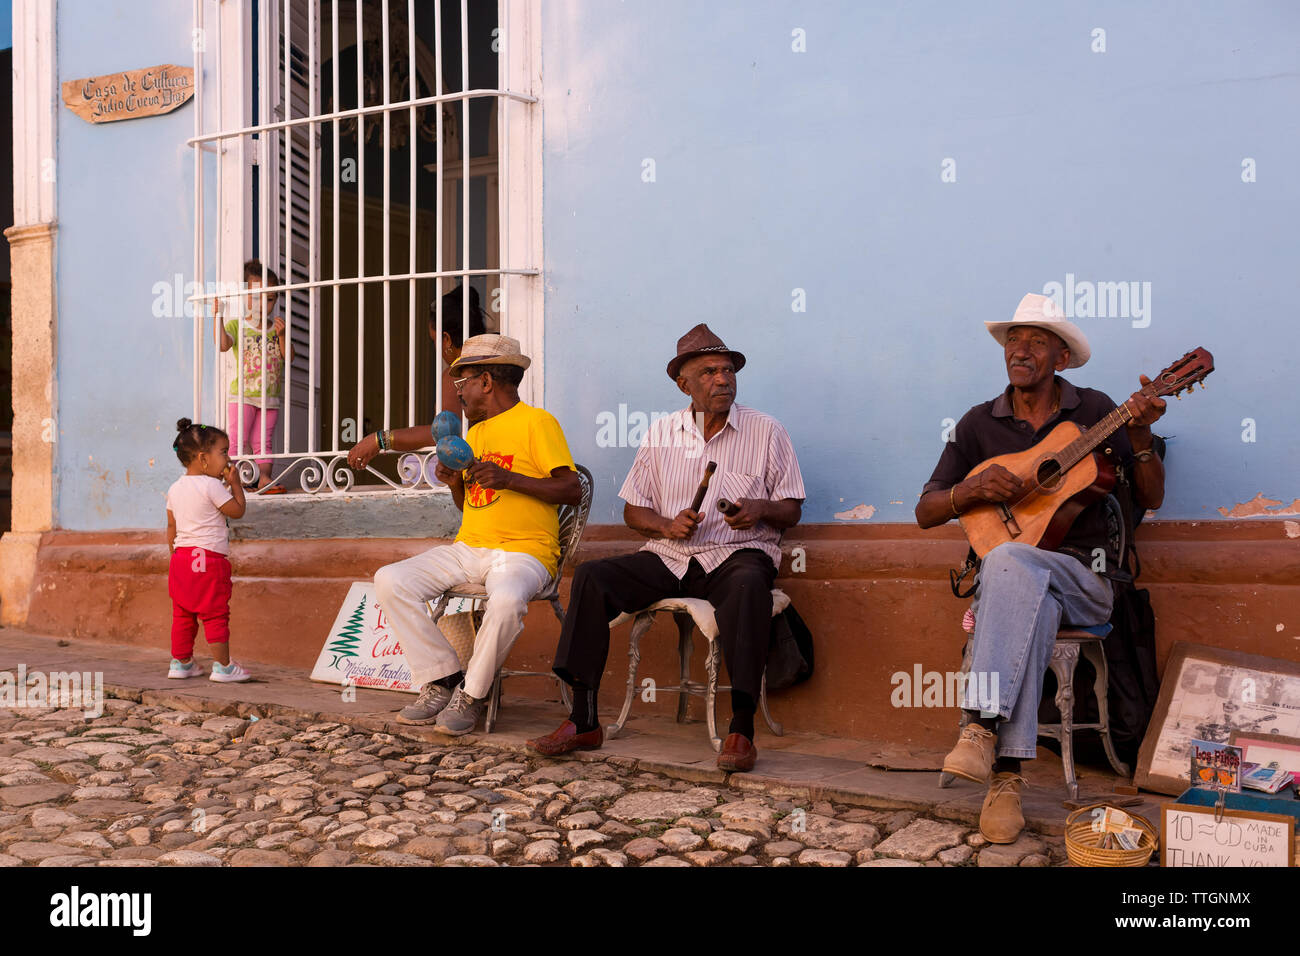 Musiker spielen auf der Straße. Real Life Szene in Trinidad, Kuba. 2017 Stockfoto